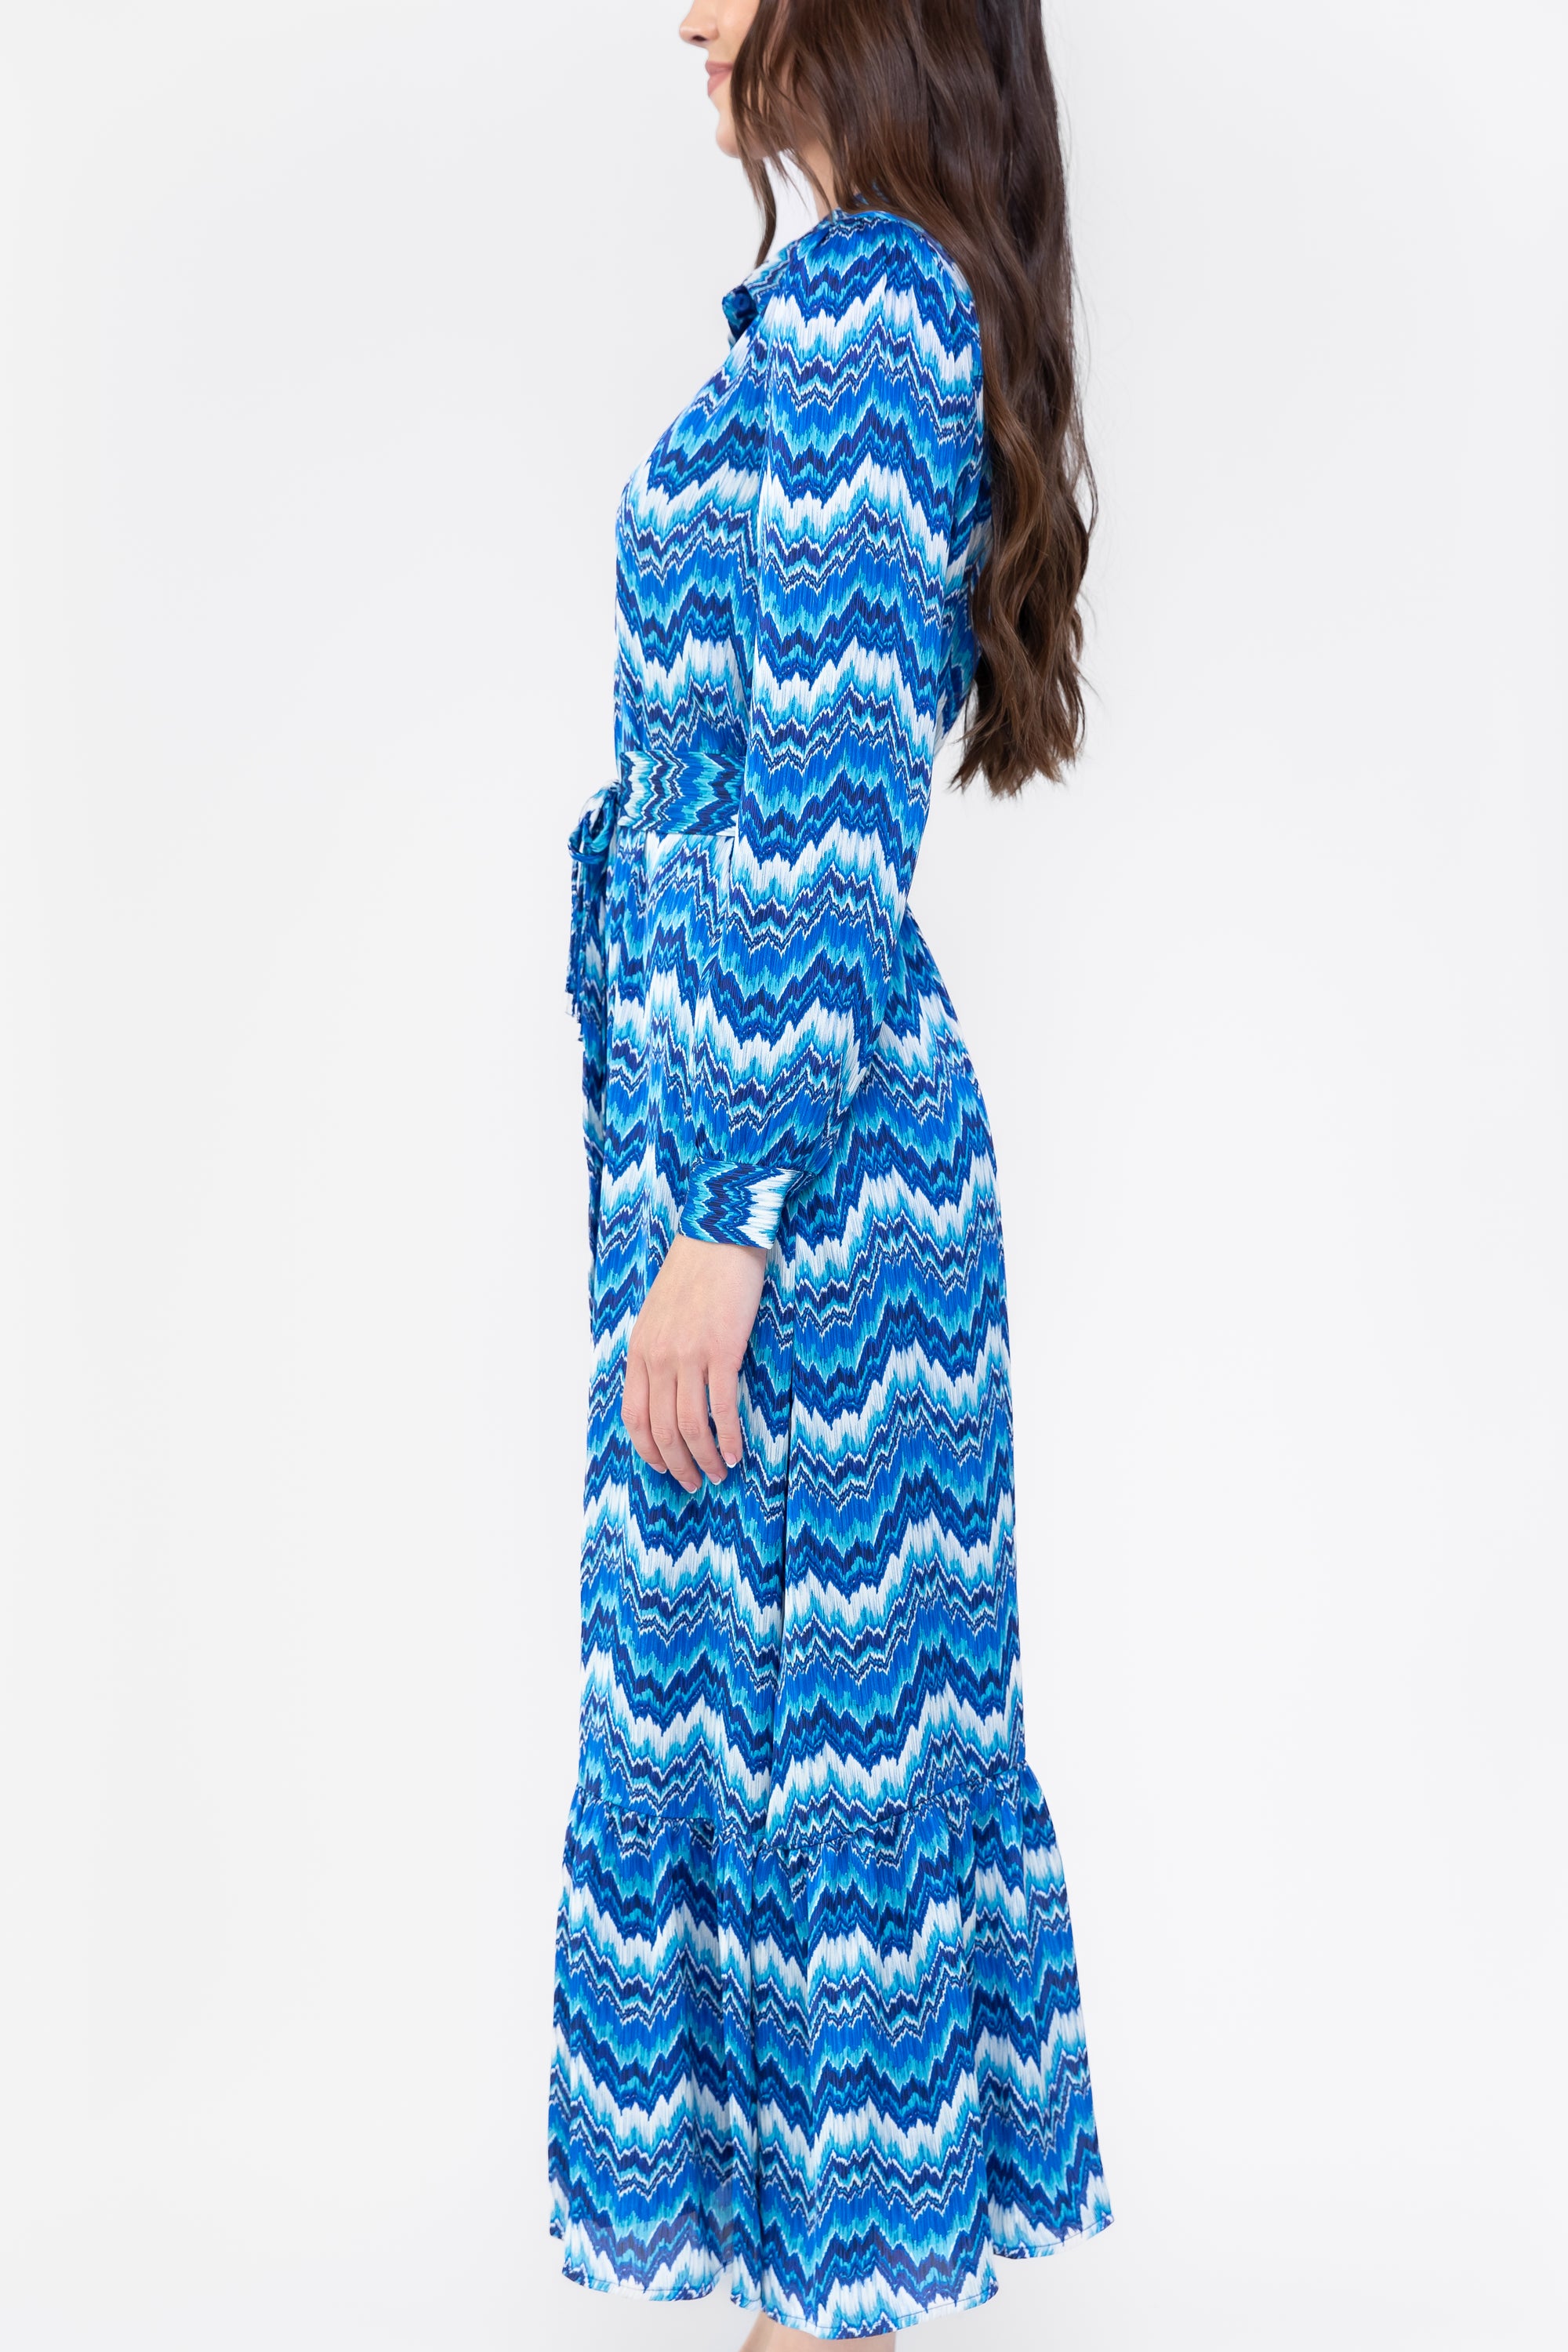 LEXI DRESS (BLUE PATTERN)